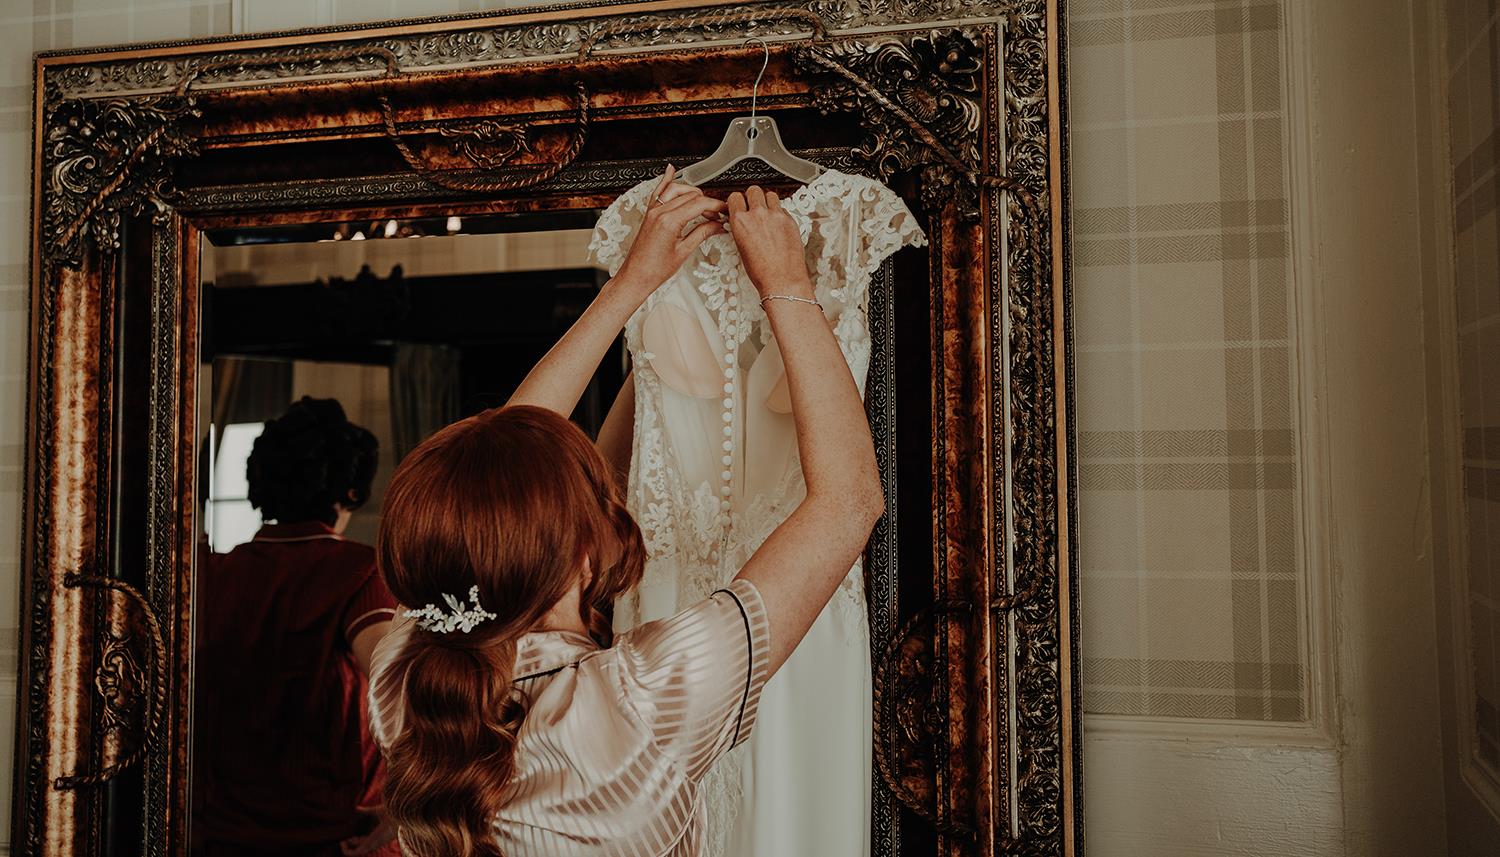 Hanging up dress. Photo Credit: Danielle Leslie Photography